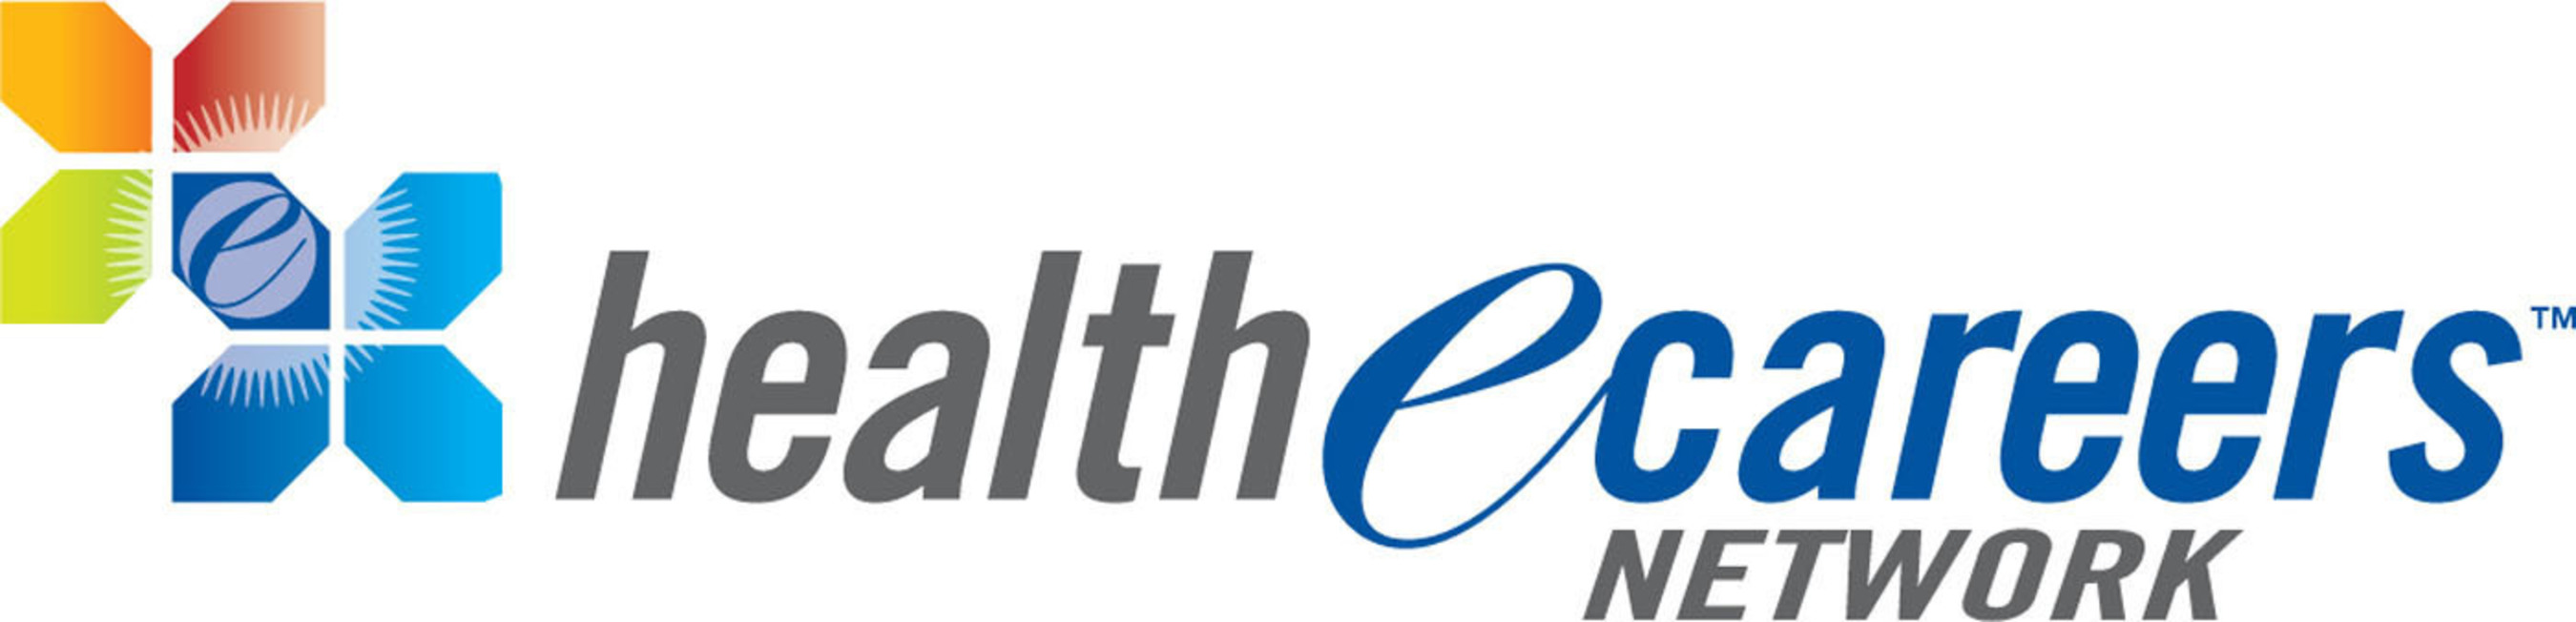 HEALTHeCAREERS Network Logo.